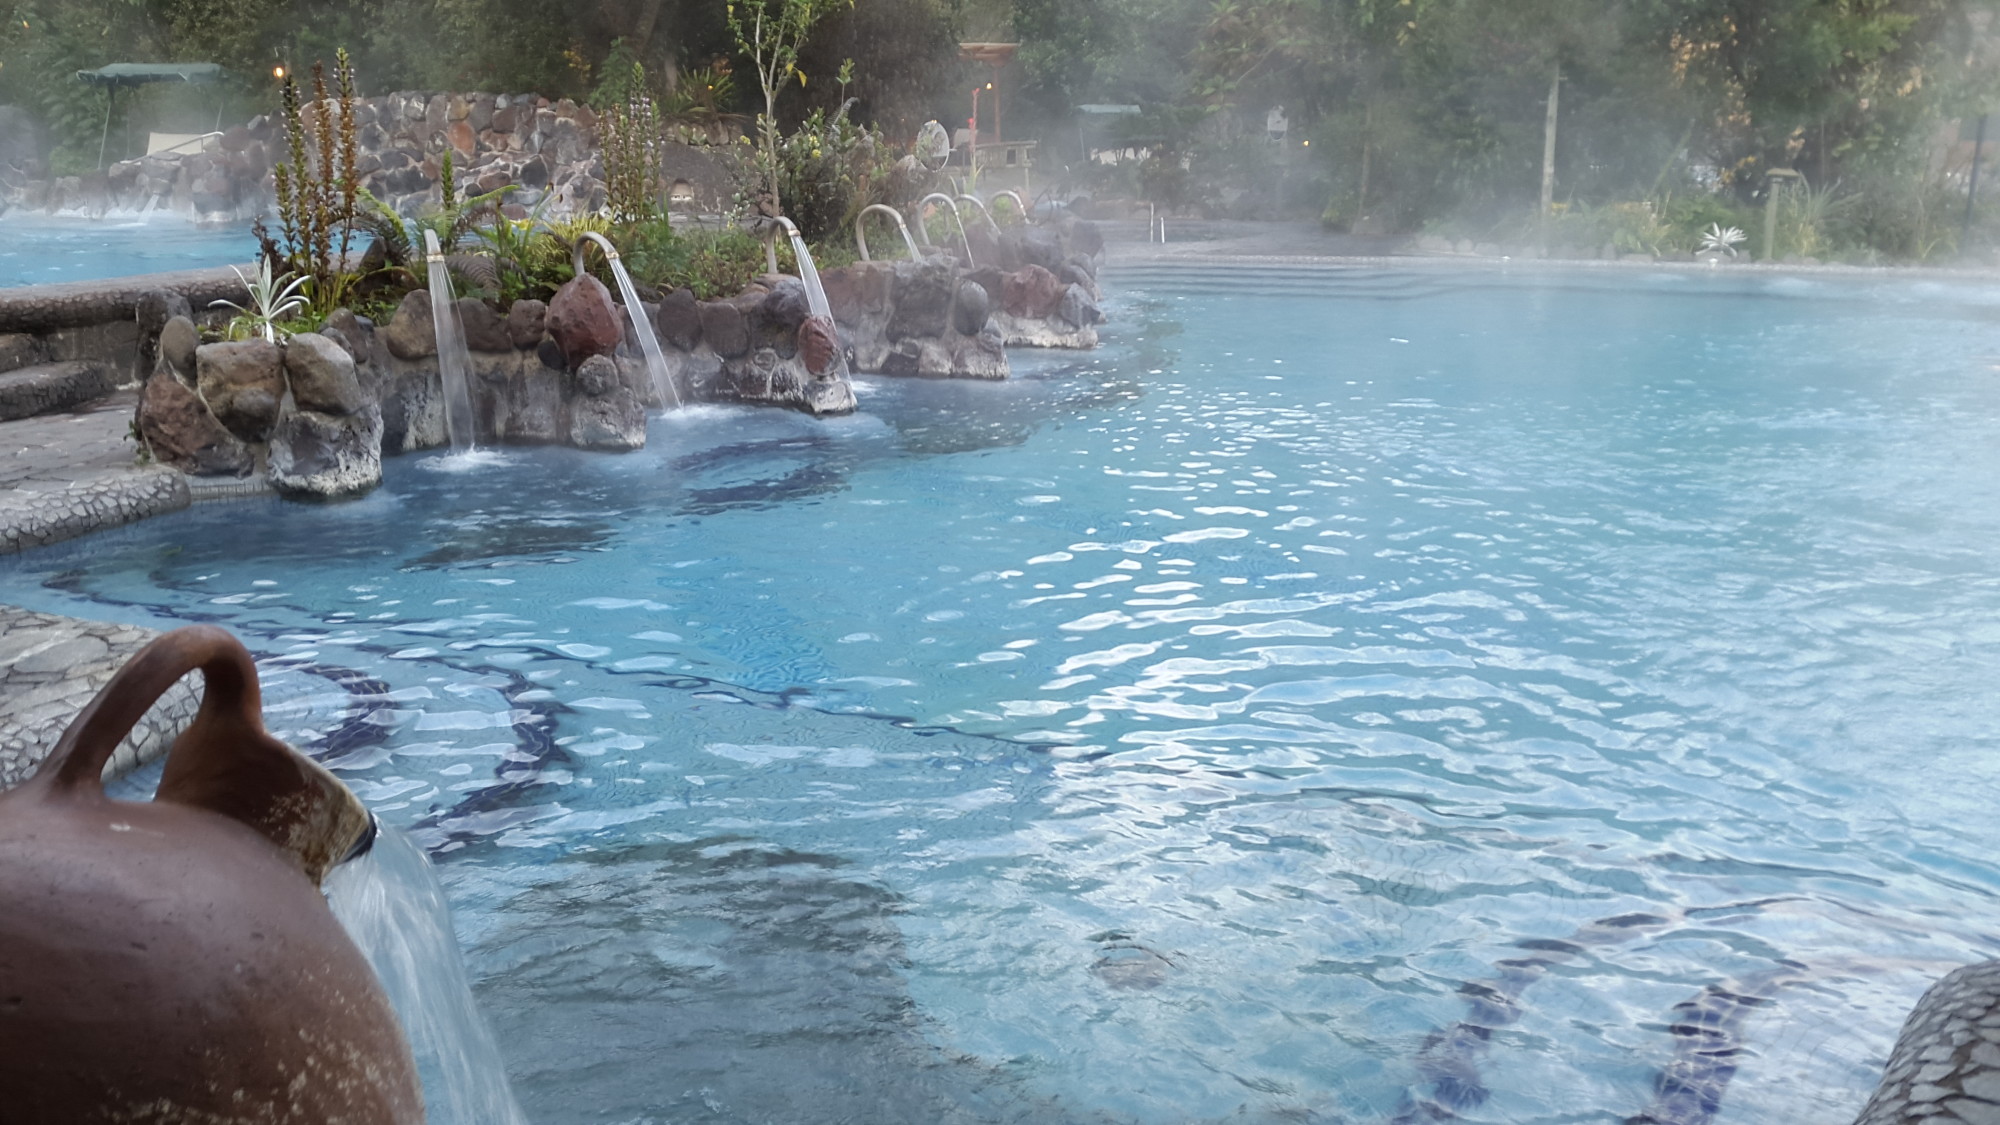 2) Papallacta Hot Springs: 